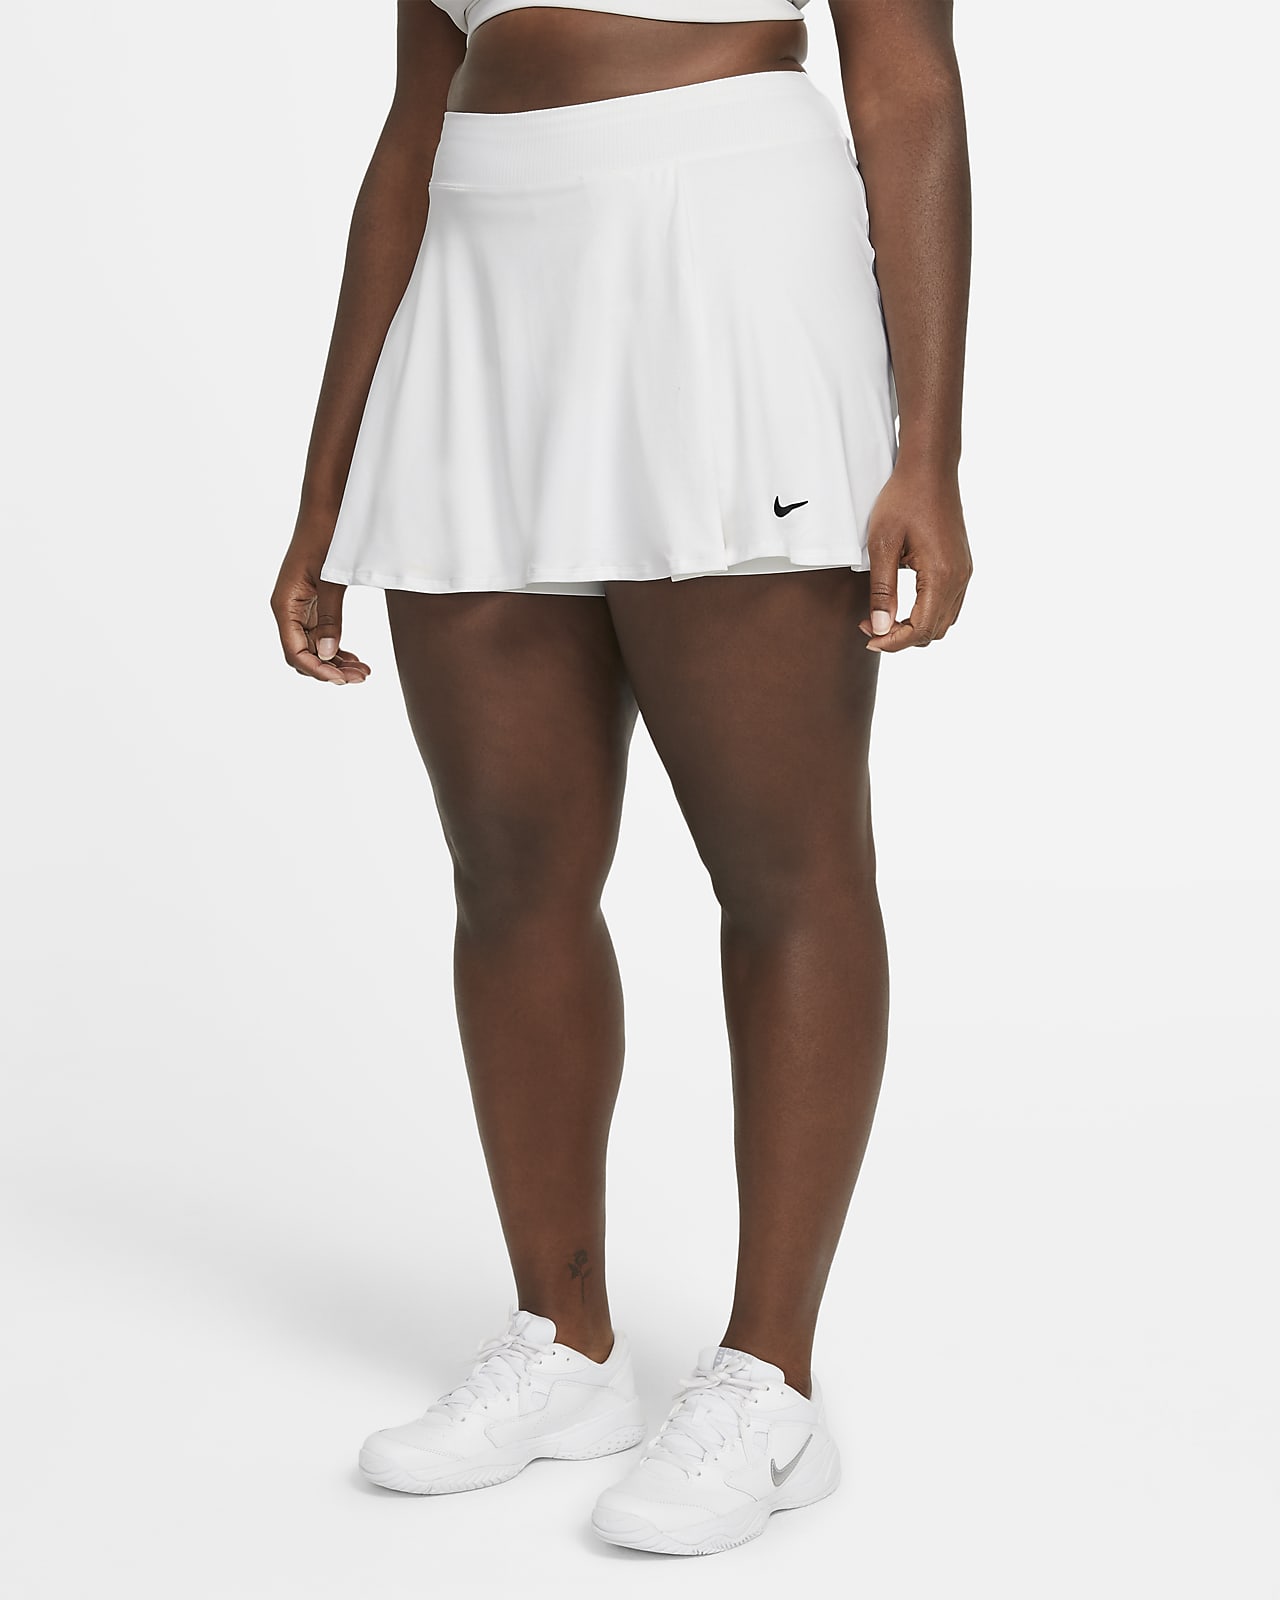 nike tennis skirt white victory